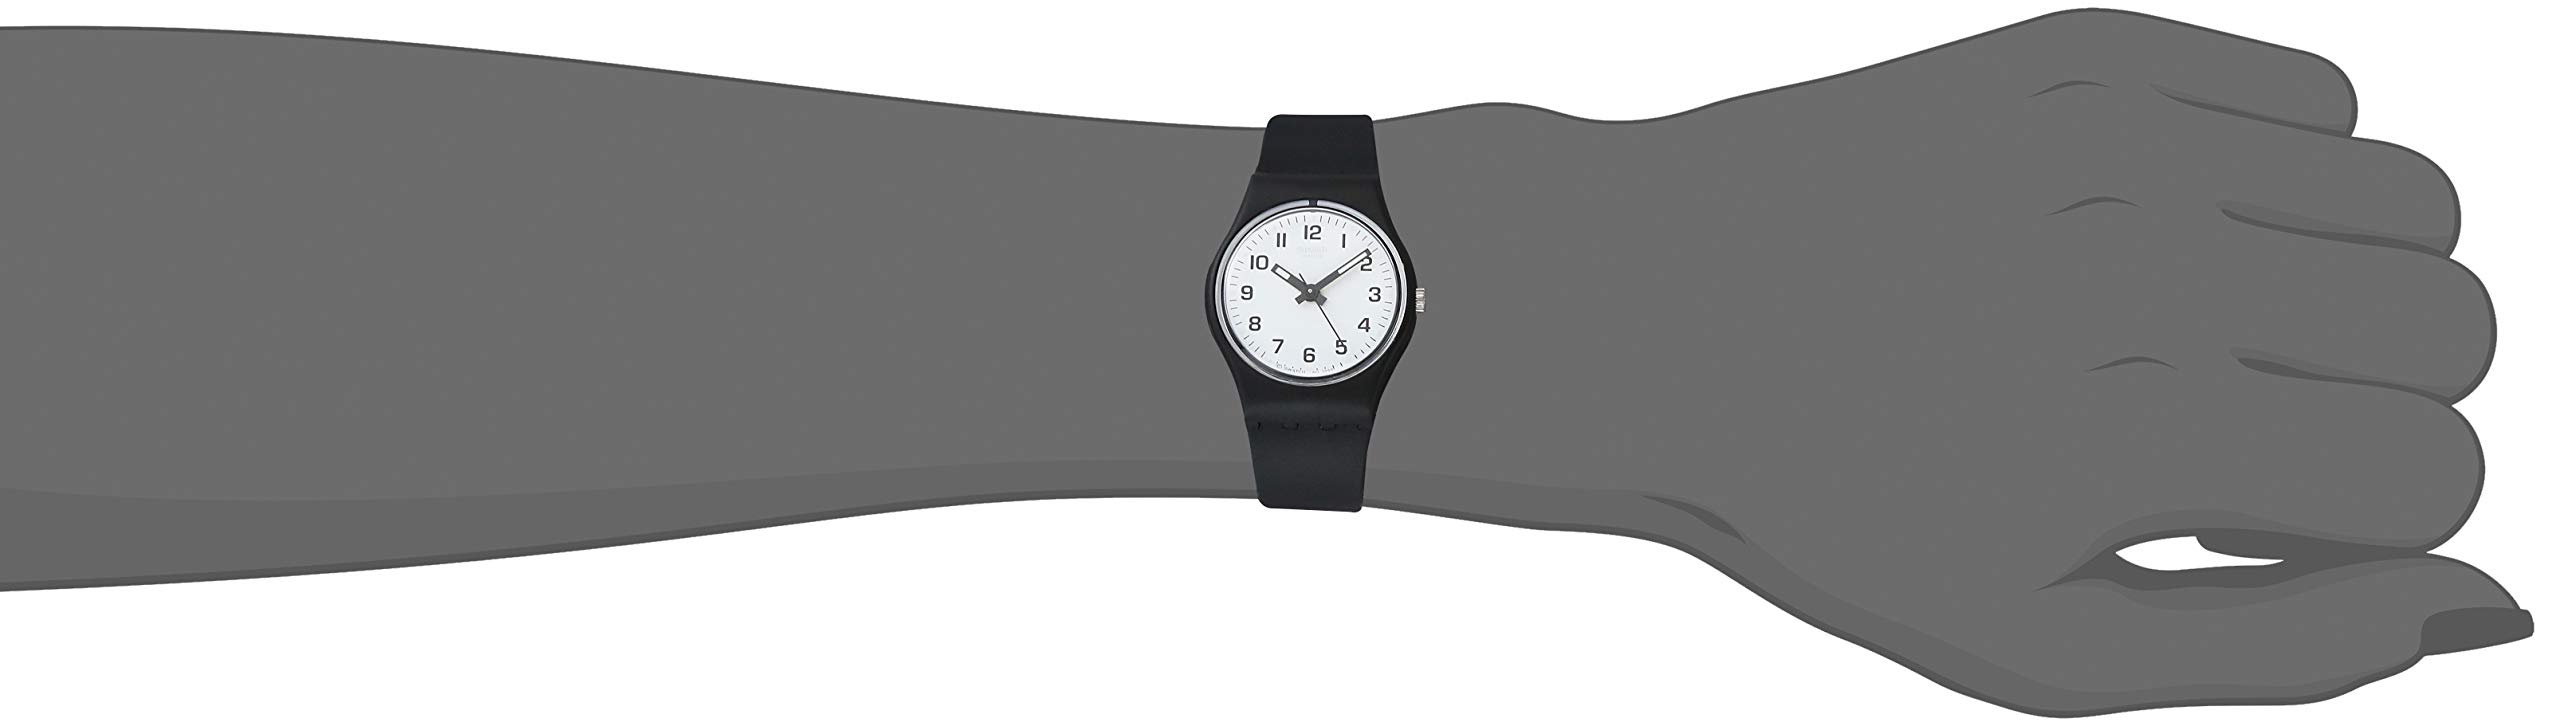 Swatch SOMETHING NEW Unisex Watch (Model: LB153)